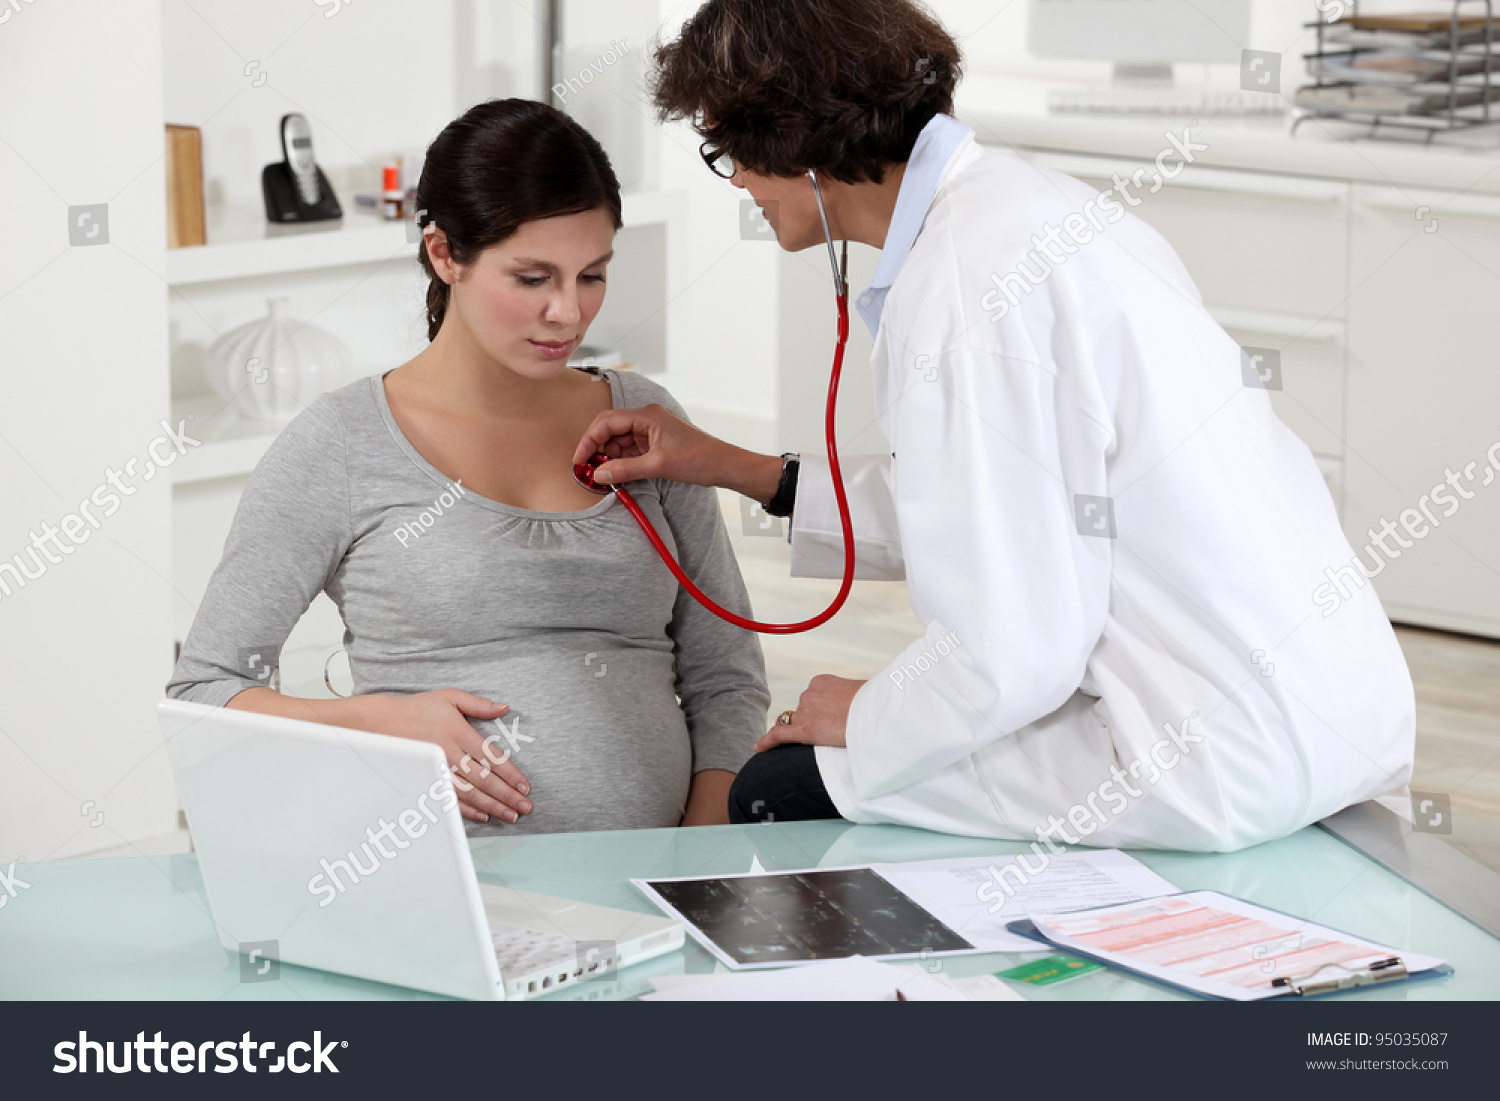 Doctors For Pregnant Women 62